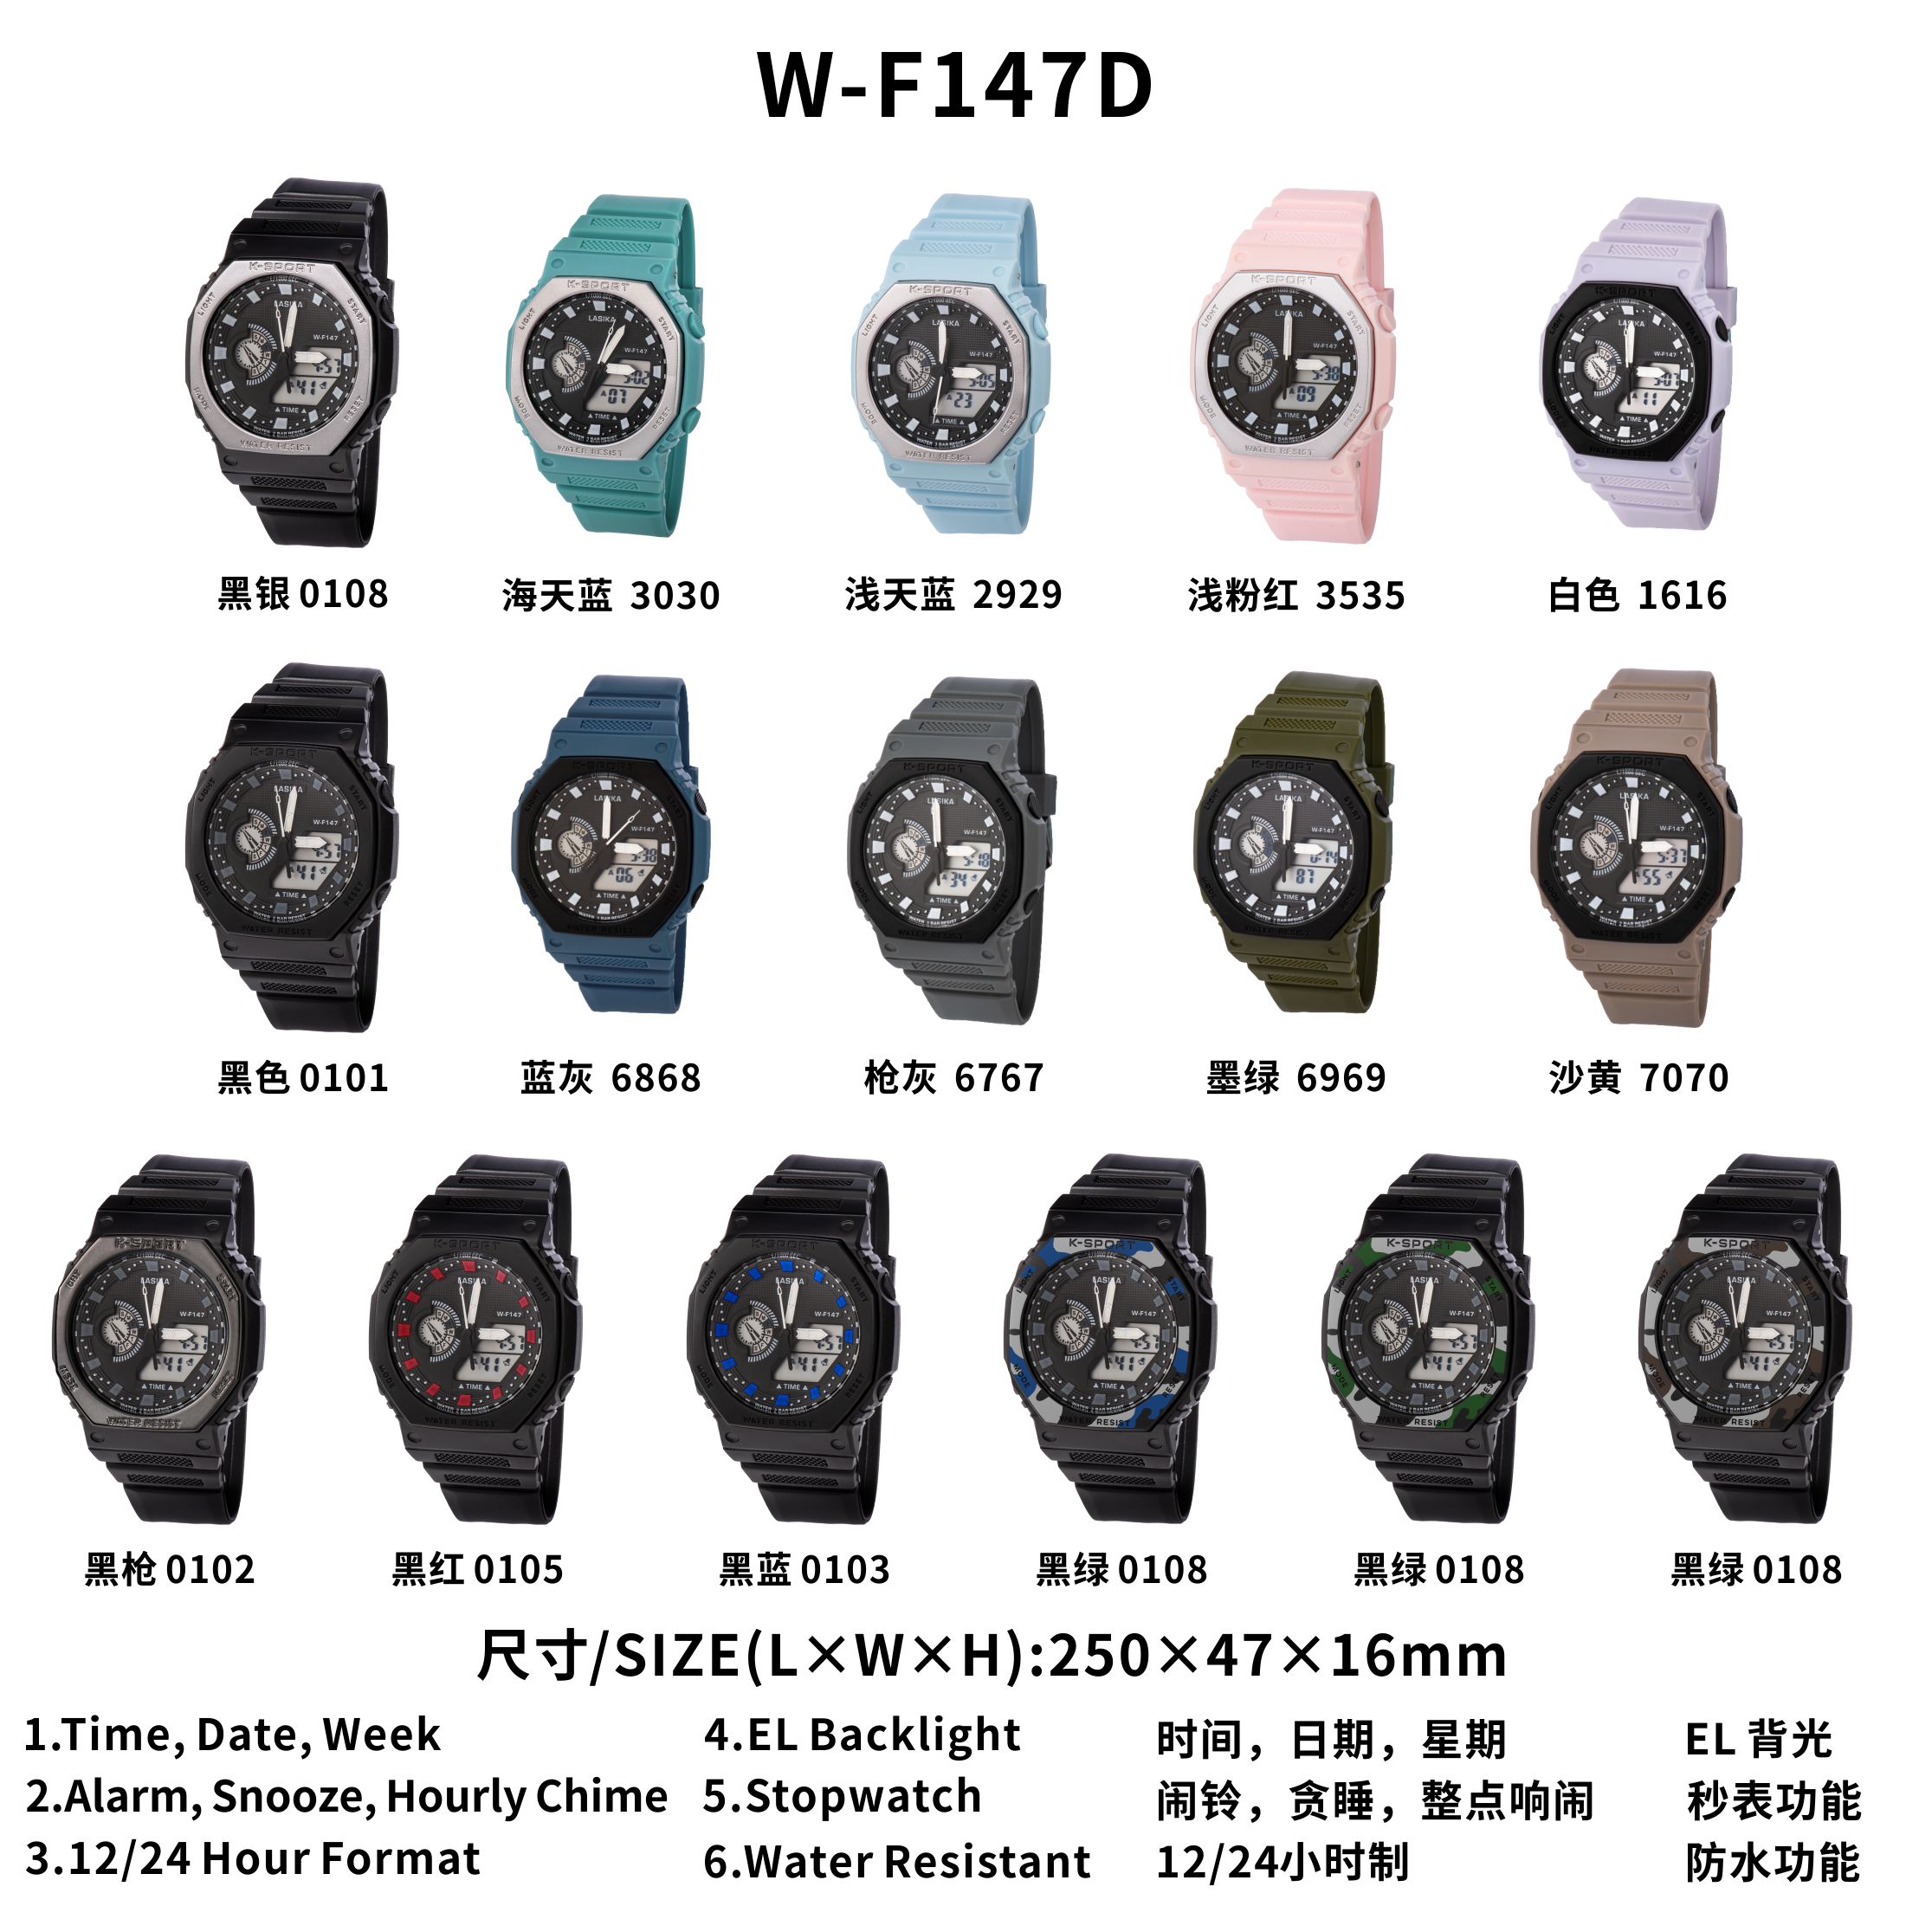 LASIKA Men's Watches Sports Outdoor Waterproof Wrist Watch Date Multi Function LED Alarm Stopwatch #147D